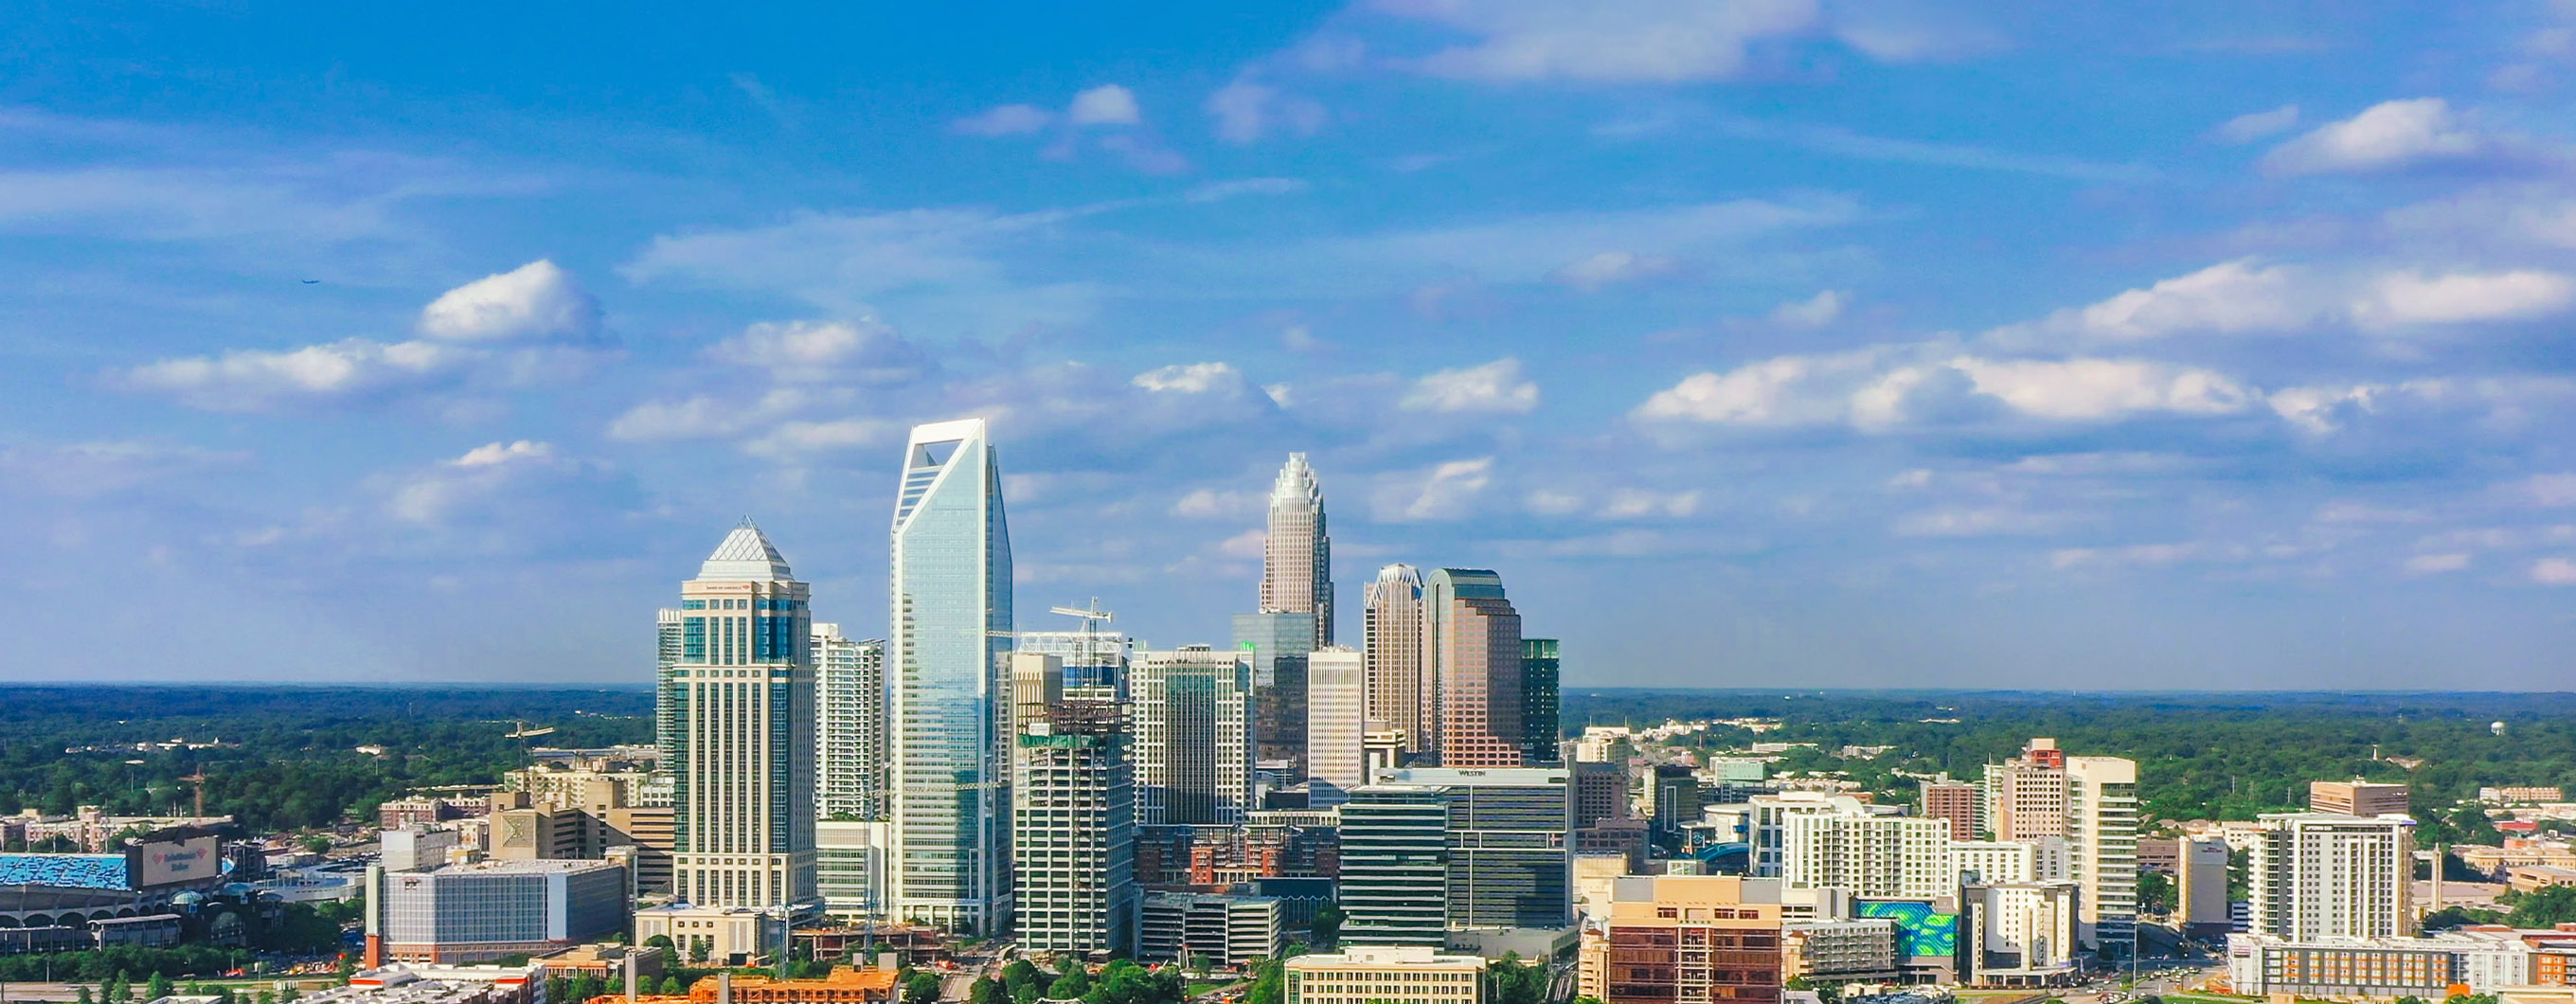 Image of the Charlotte city skyline